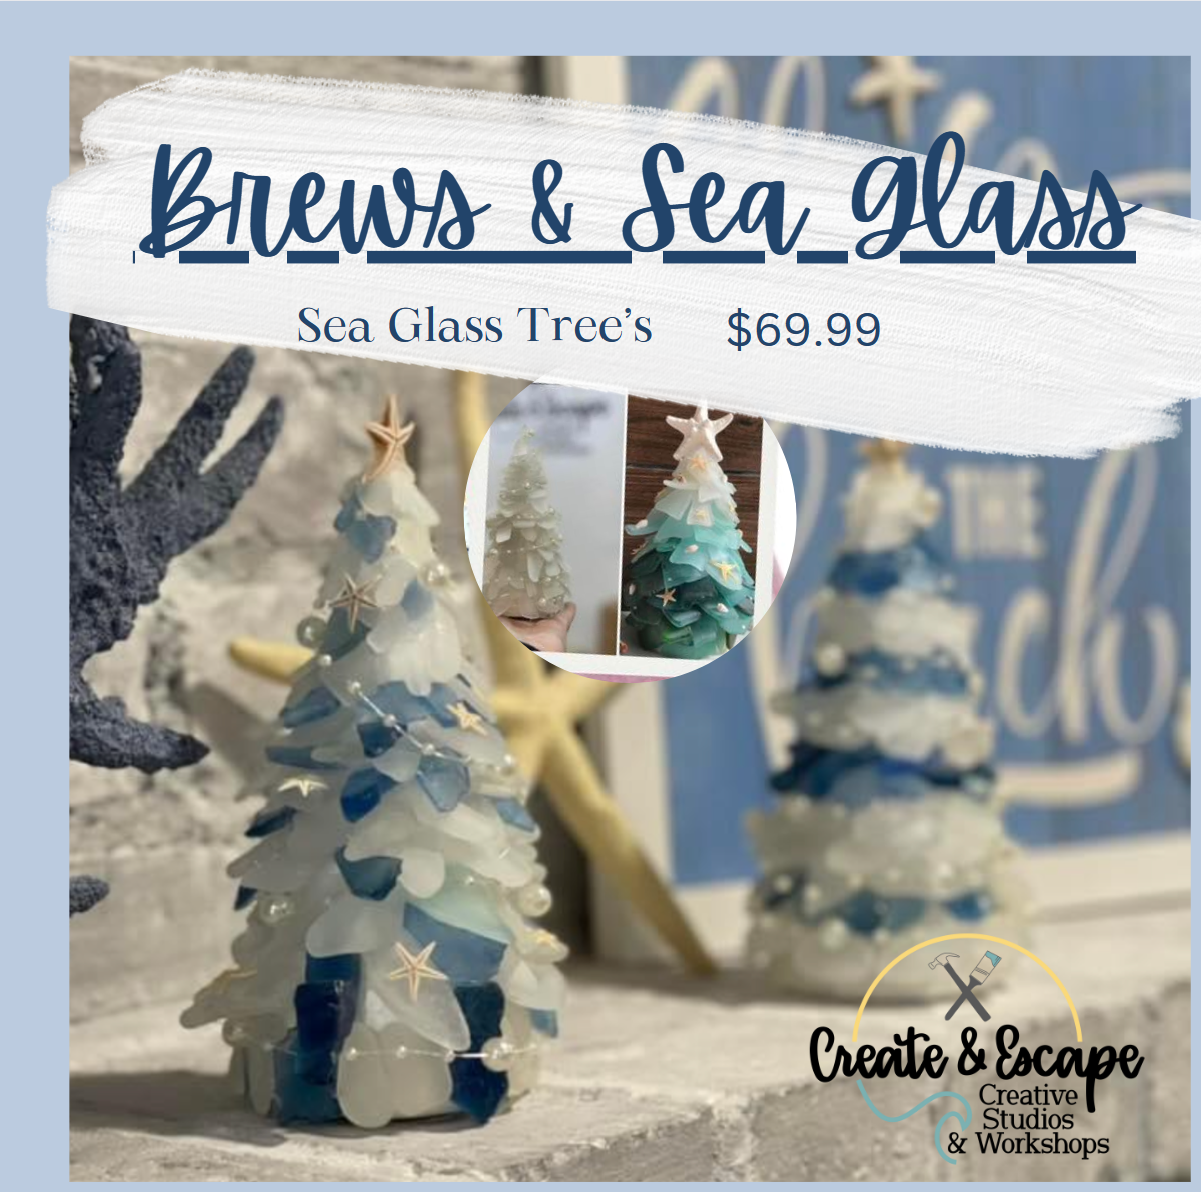 Brews & Sea Glass Sunday 1pm & 3pm revised time 2/18, Sea Glass Art Tree &| Open Workshop@ Granite Coast Brewing Company